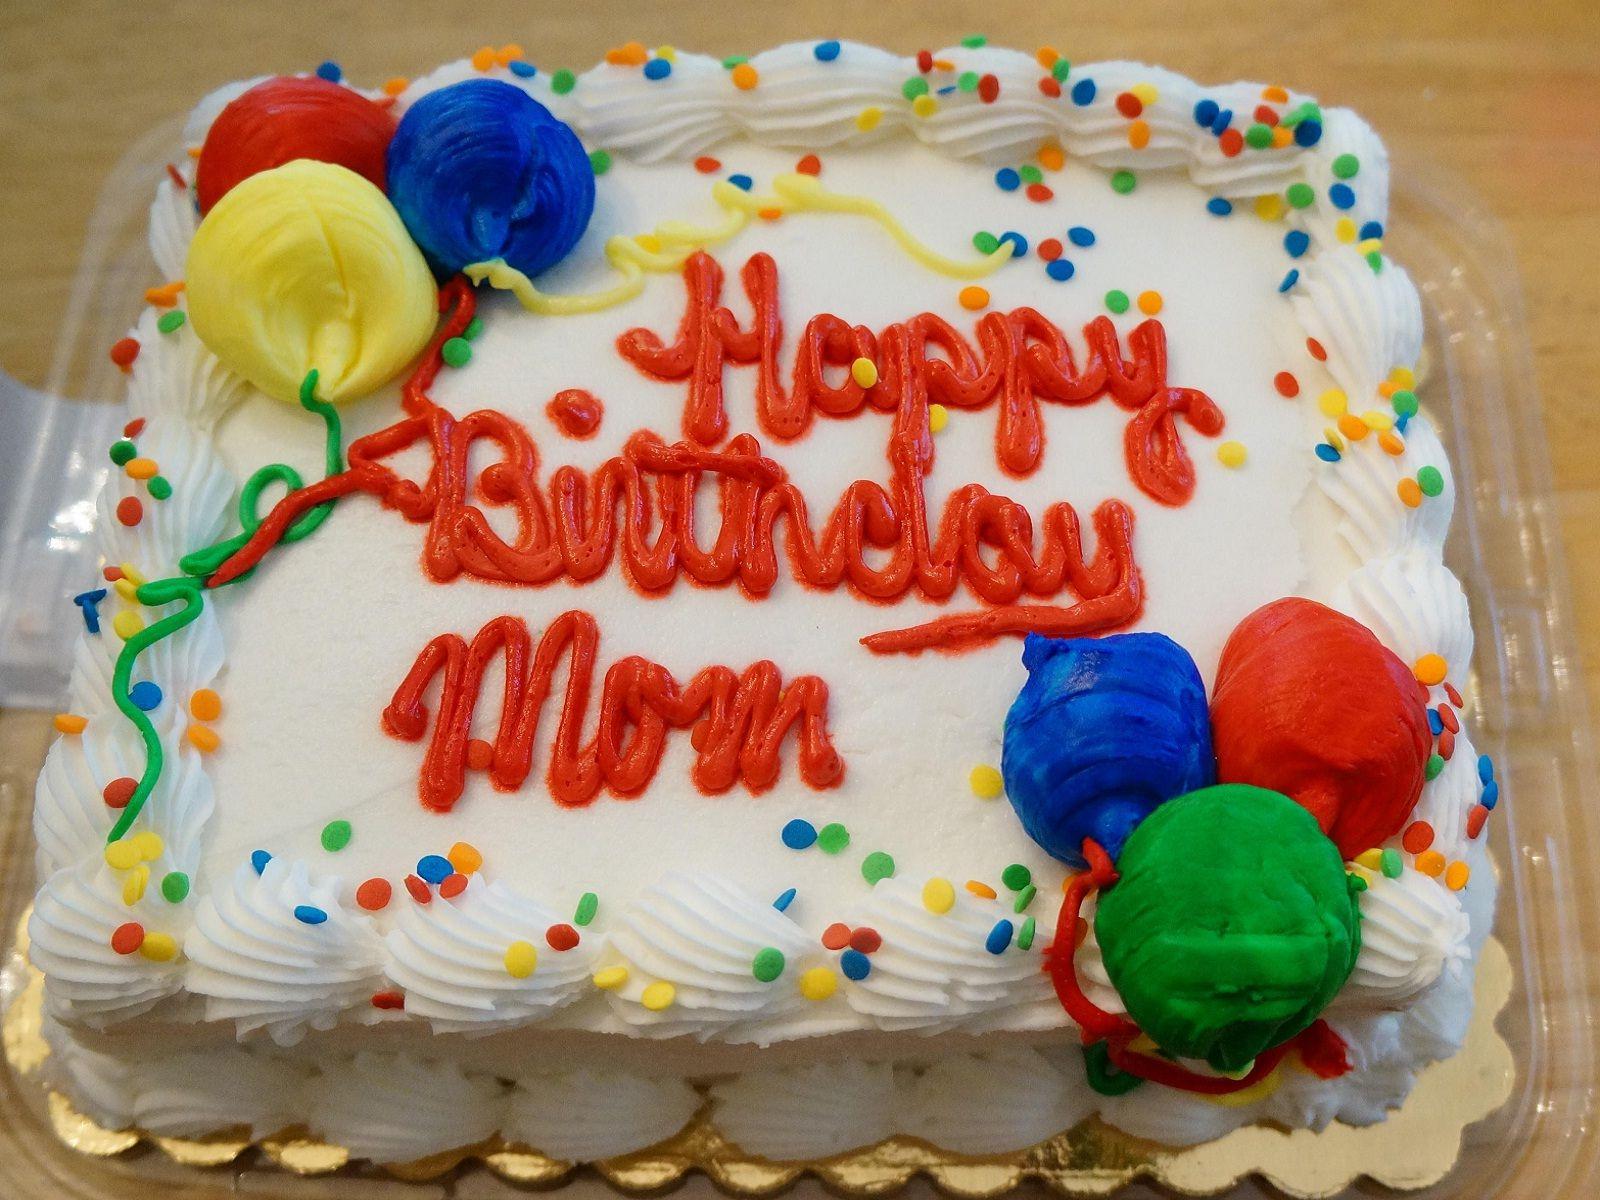 Happy birthday mom HD wallpapers